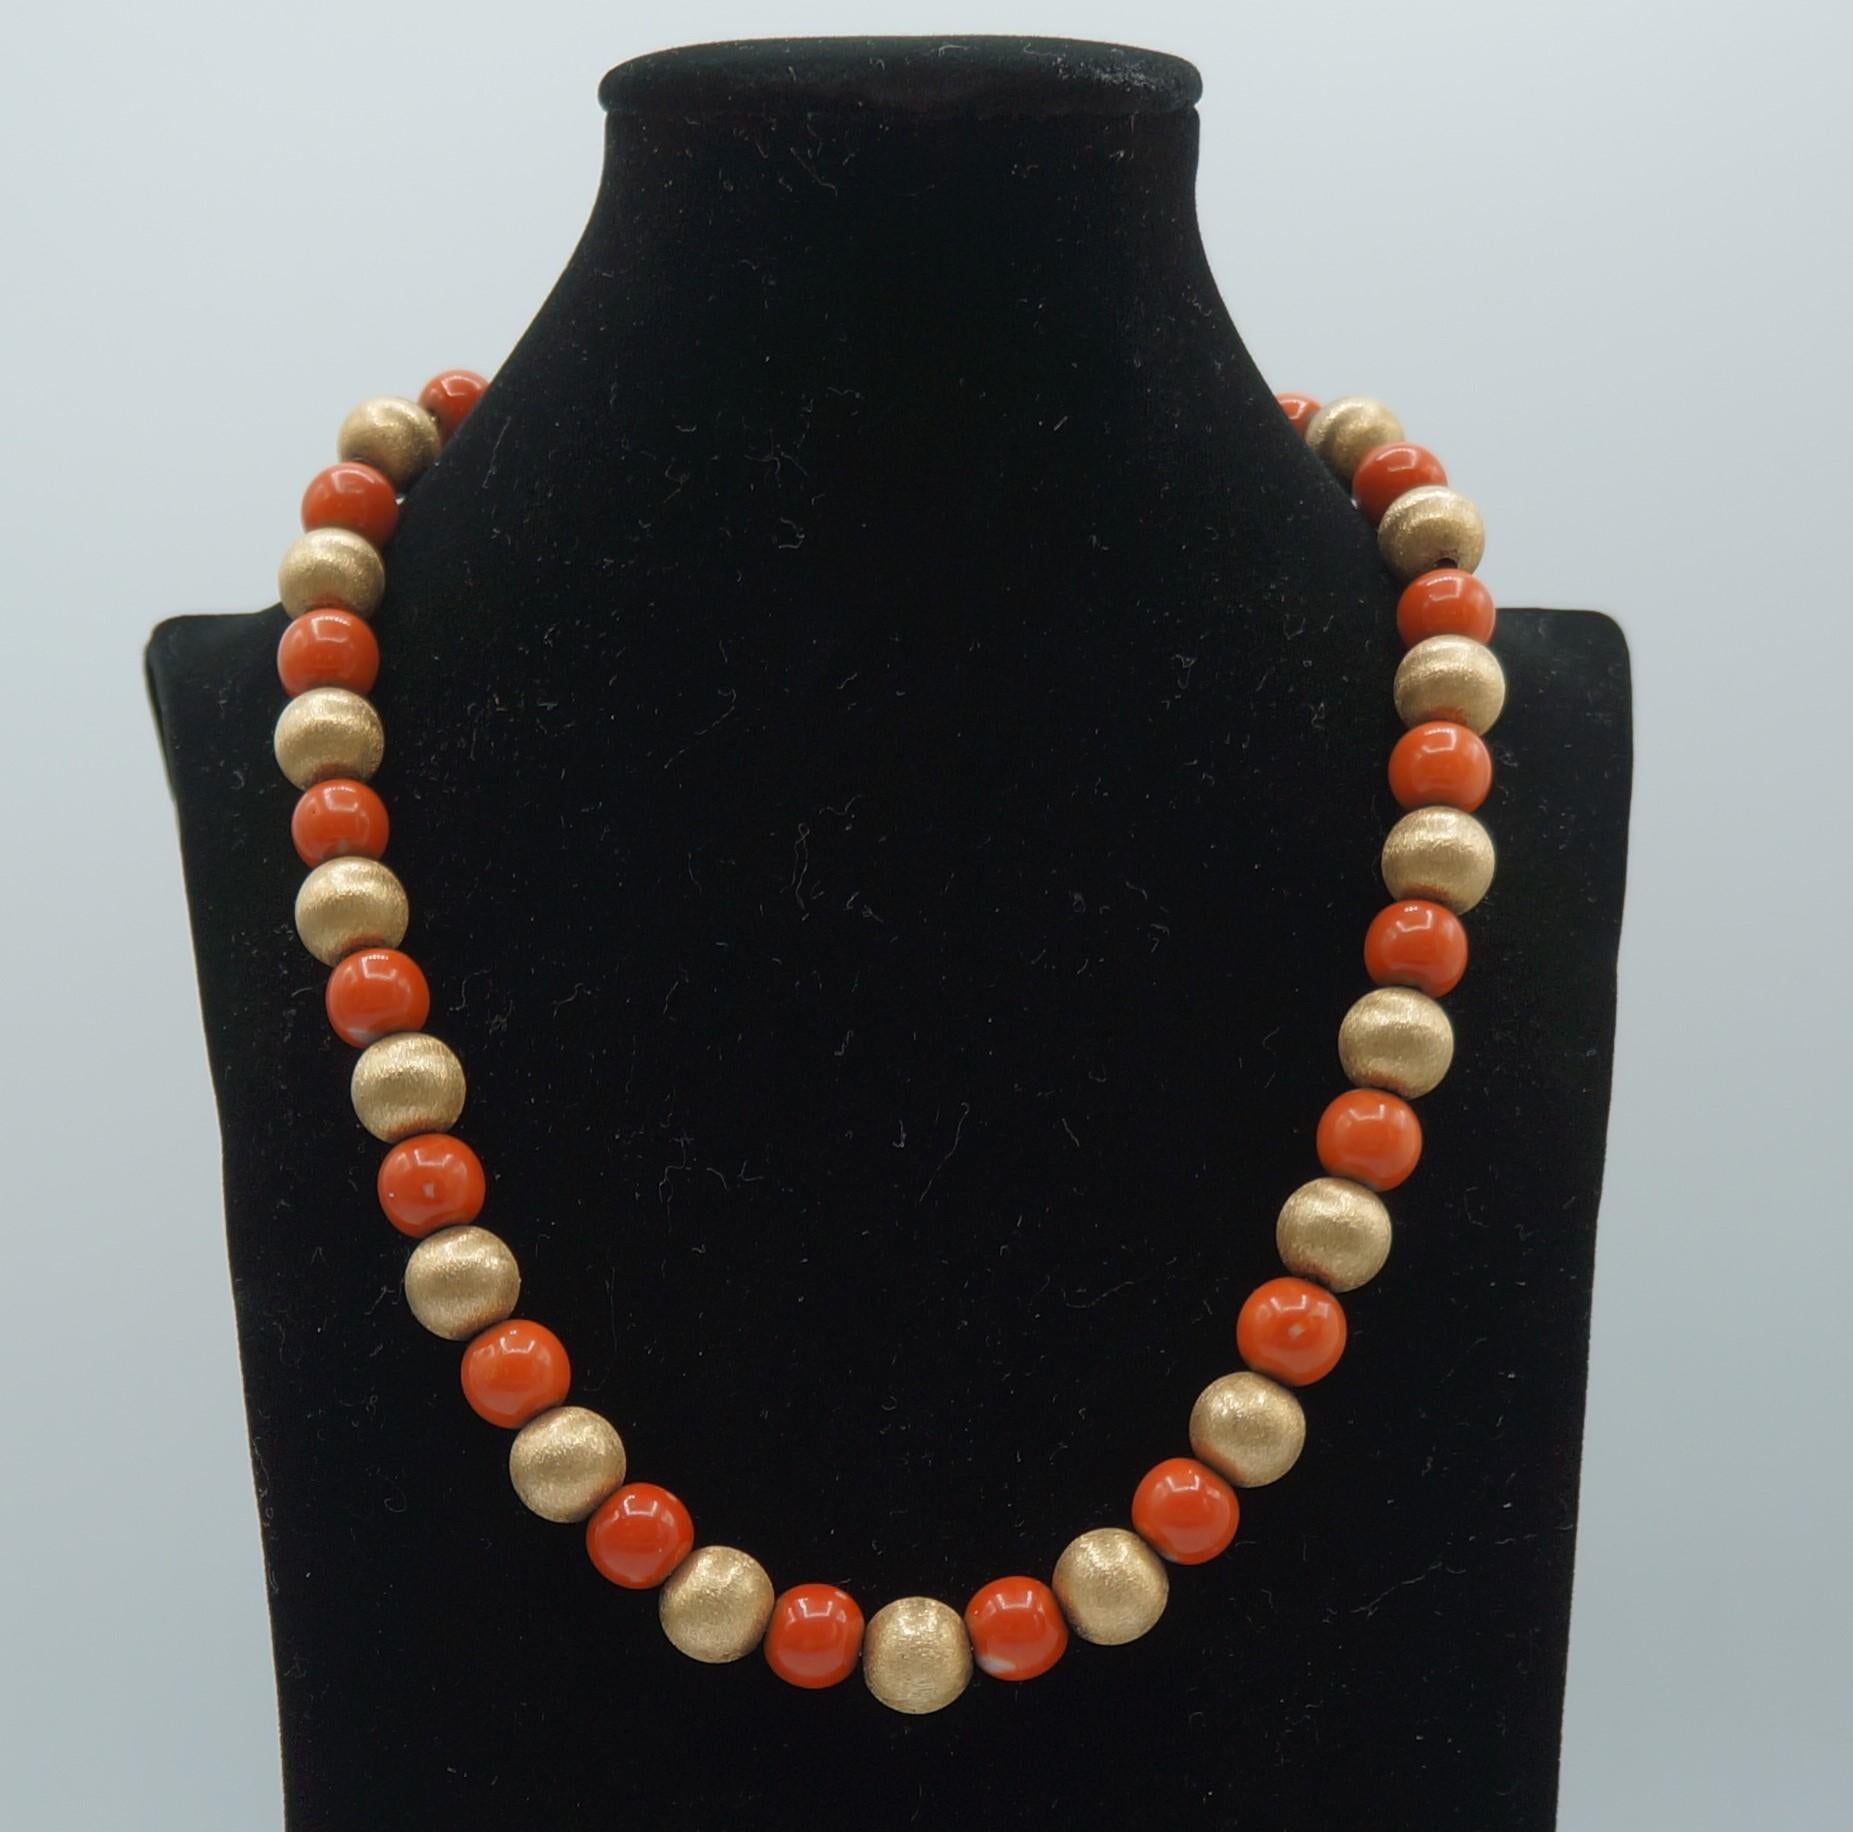 Cartier Vintage 14kt Gold Mediterranean Coral Bead Necklace 

Comprised of 22, 10mm Textured Gold Beads and 21, Red Mediterranean Coral Beads 

Measures 15.5 Inches / 39.5cm

Hallmarks: 